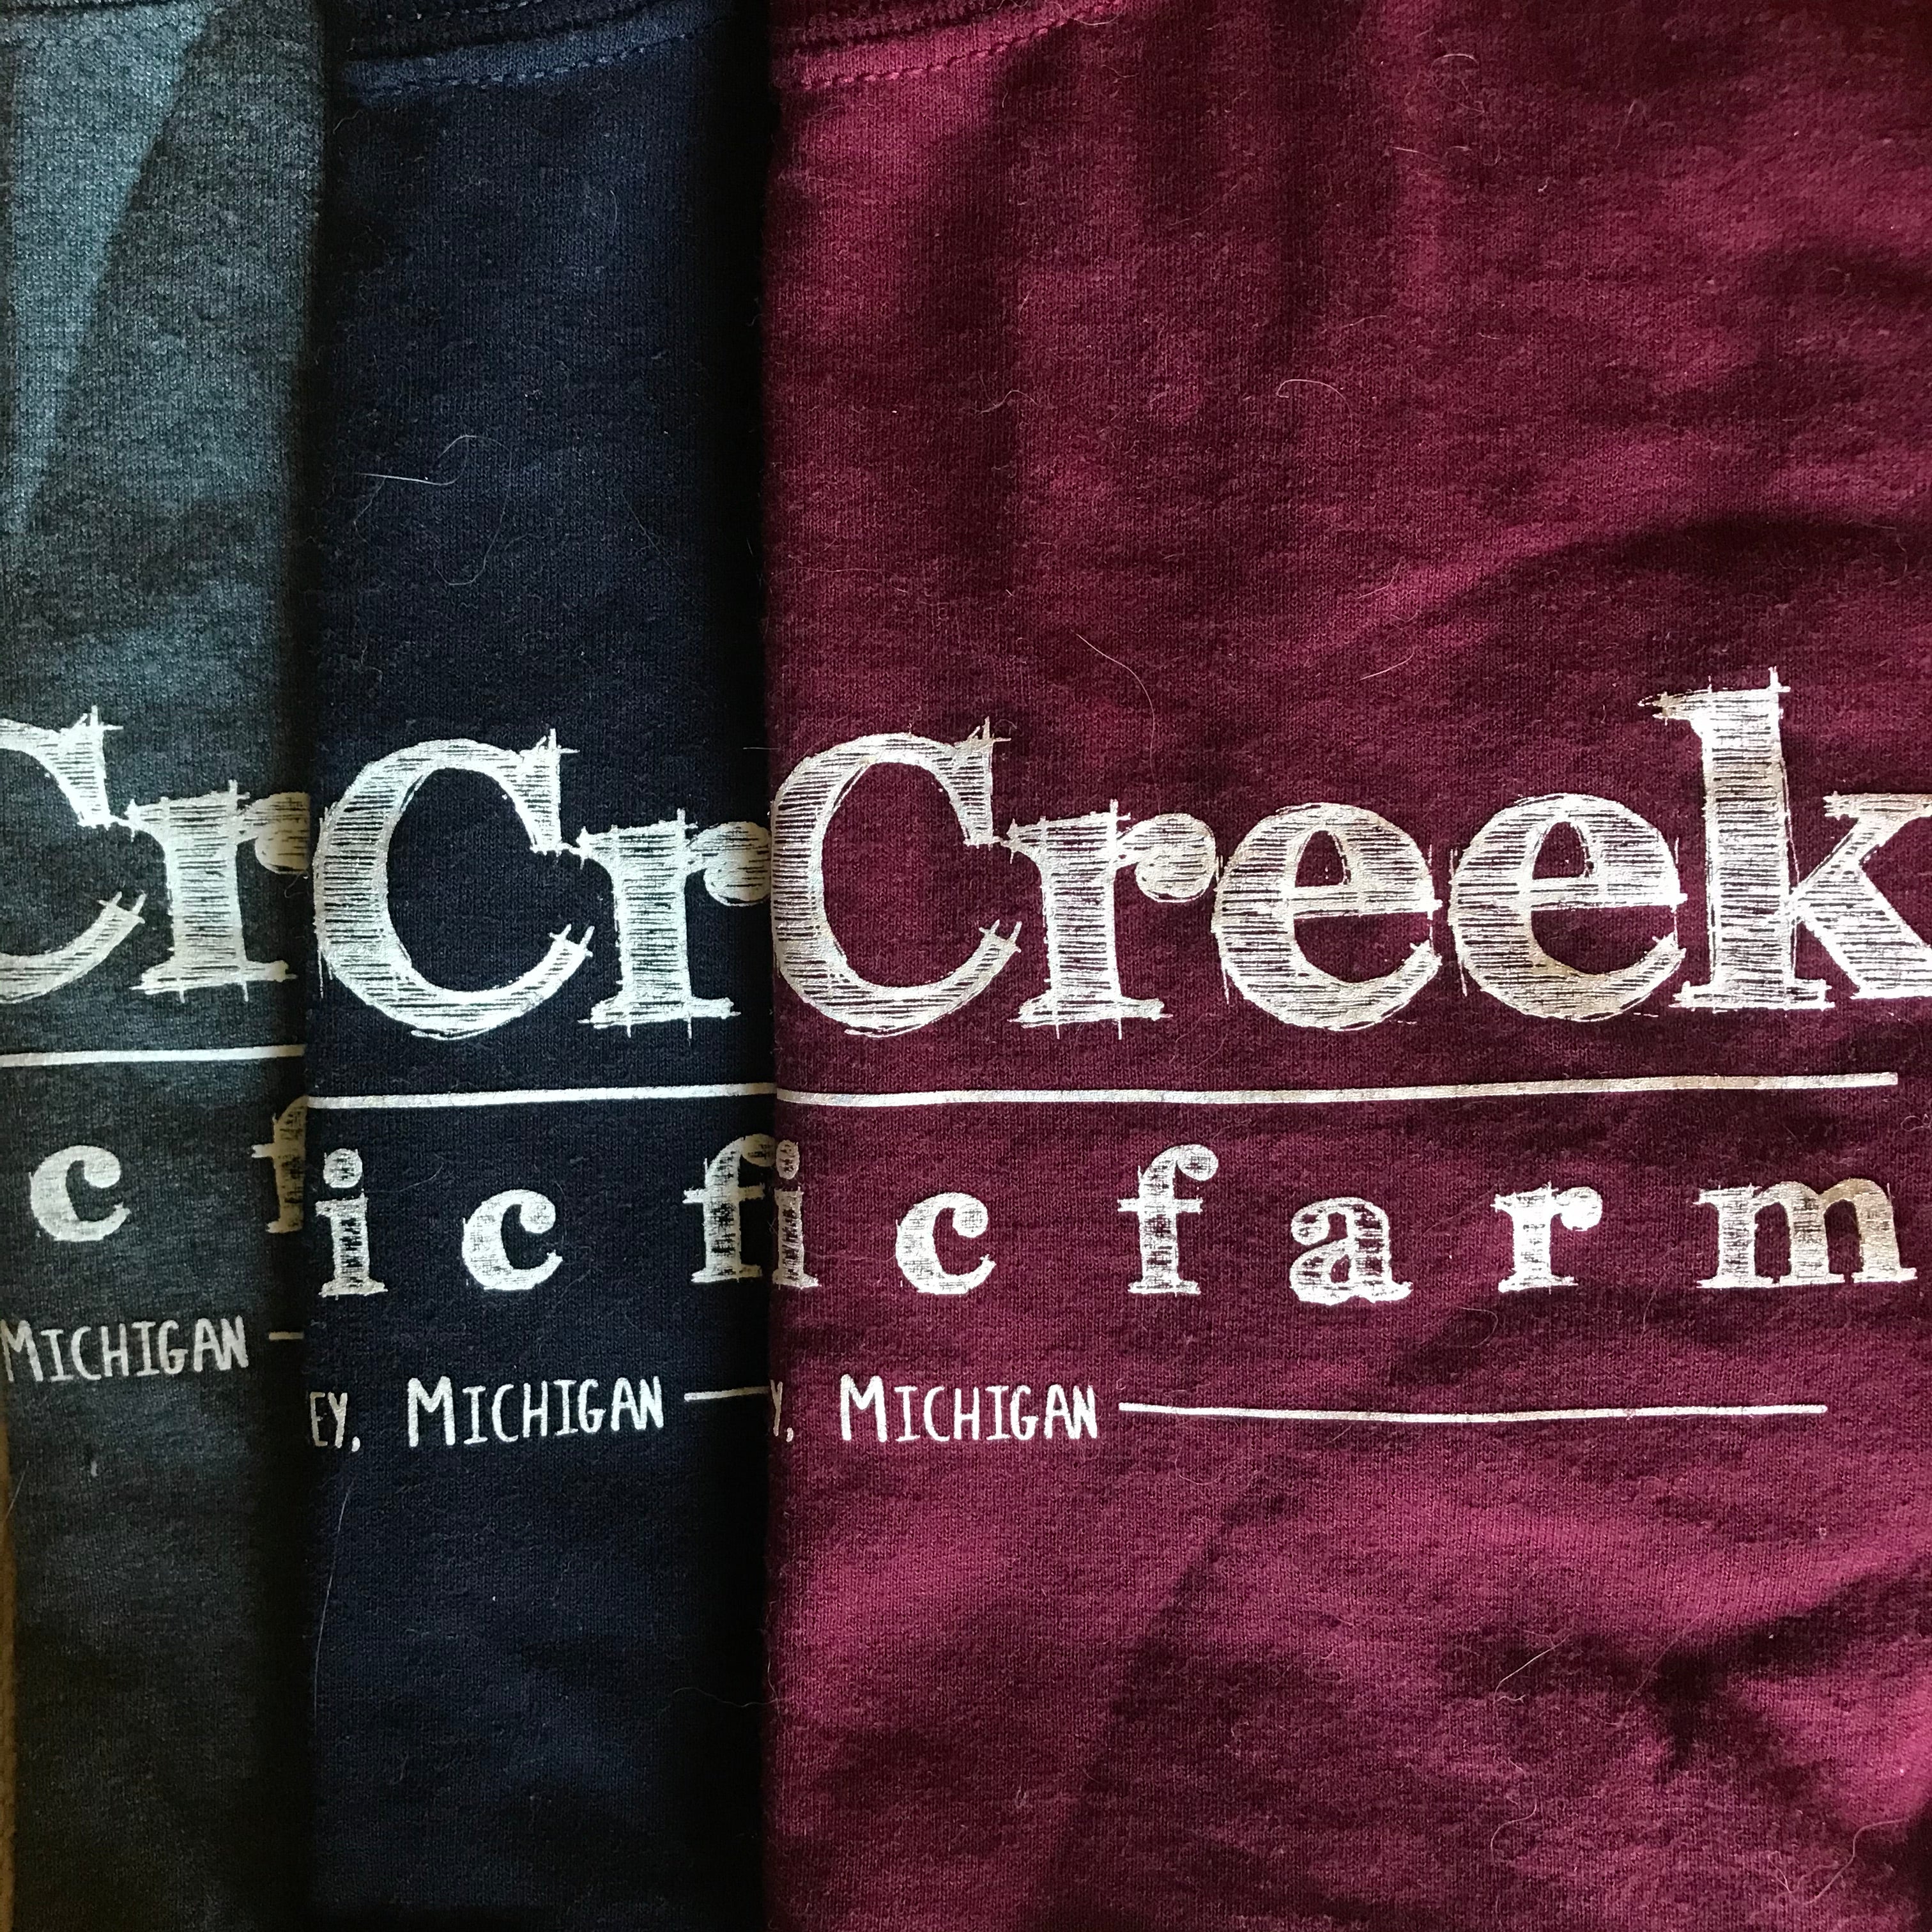 Bear Creek T-Shirt - Long Sleeve